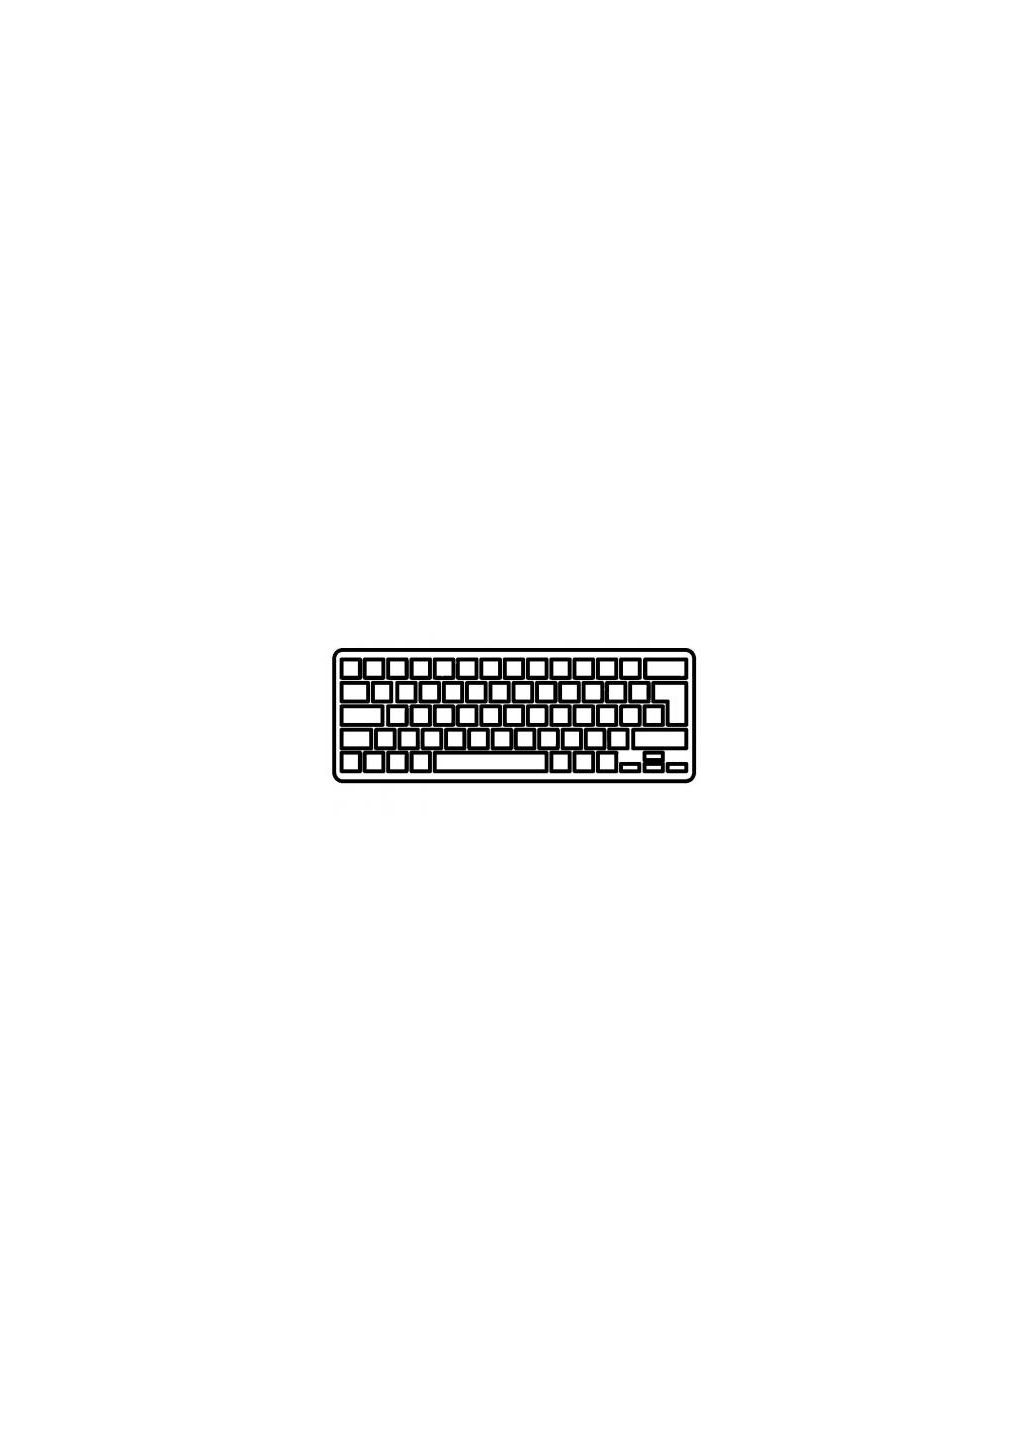 Клавиатура ноутбука Macbook Pro 15.4" A1286 (2008 года) черн. без рамки RU/US (A43537) Apple macbook pro 15.4" a1286 (2008 года) черн.без рамки (276706515)